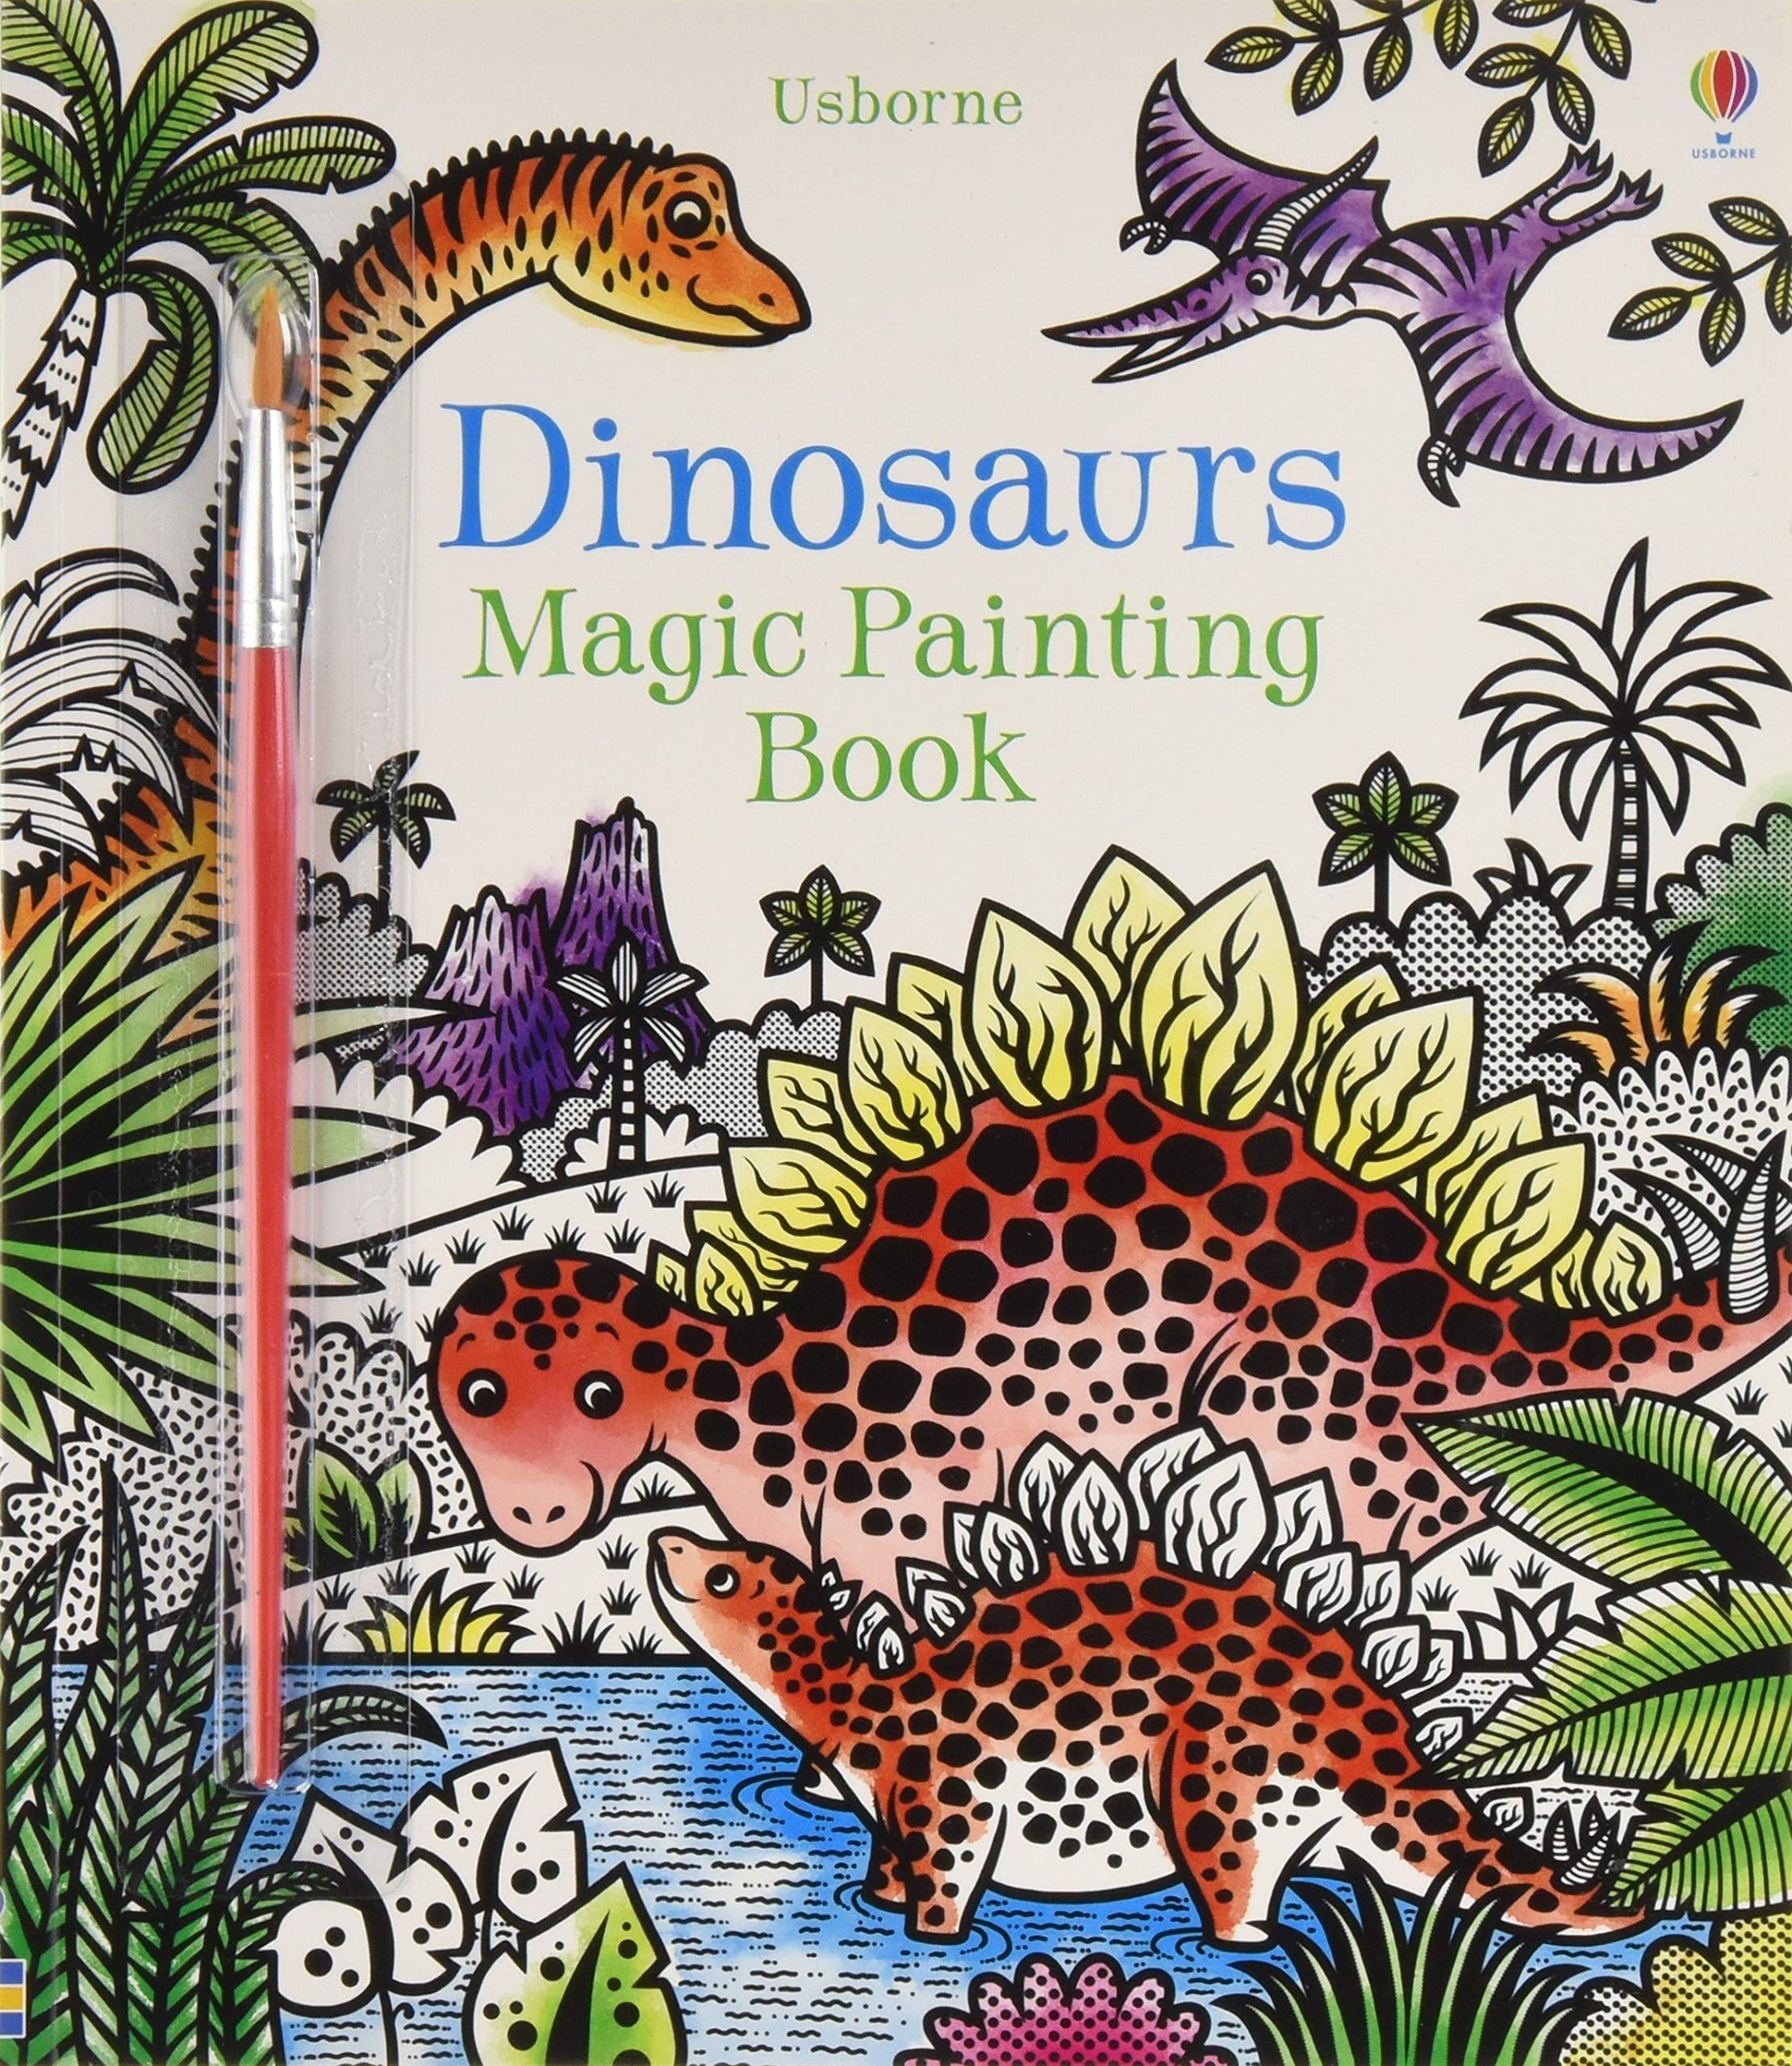 Dinosaurs Magic Painting Book  - Usborne